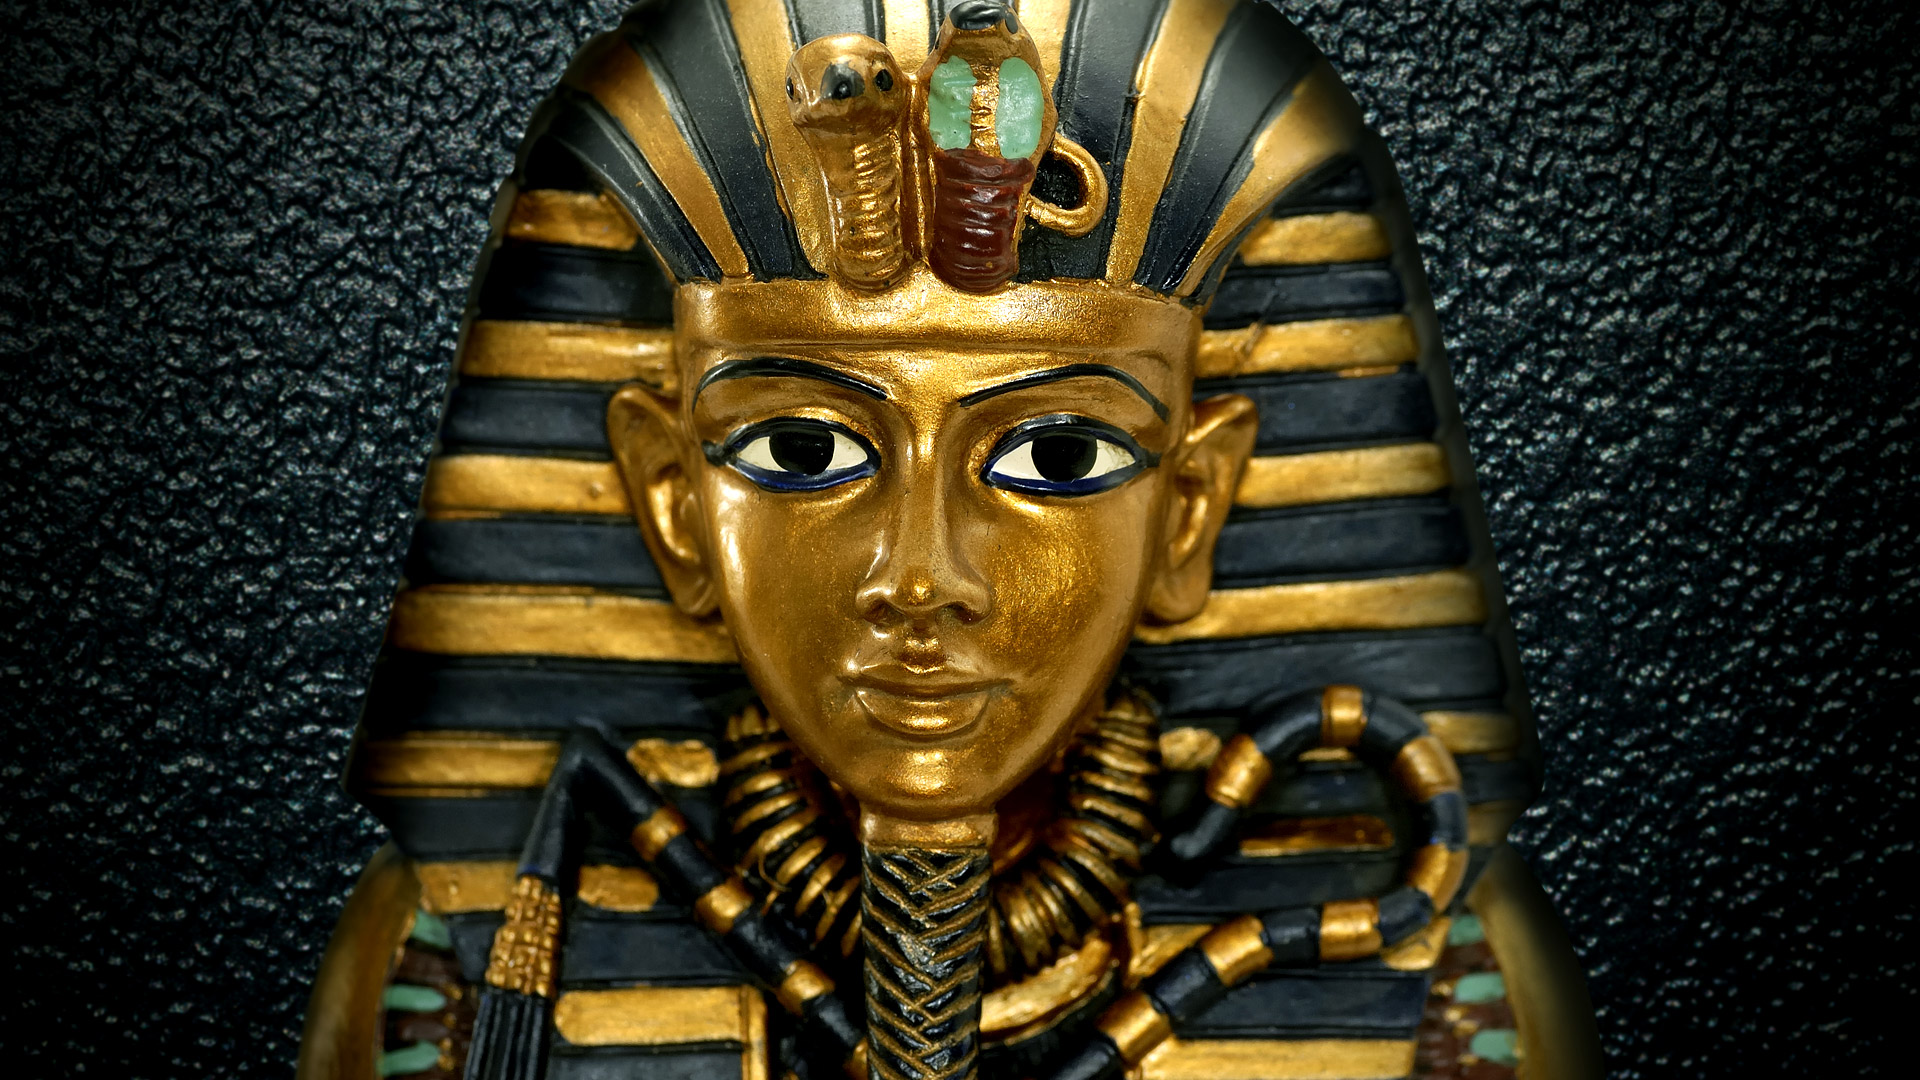 mummy sarcophagus designs